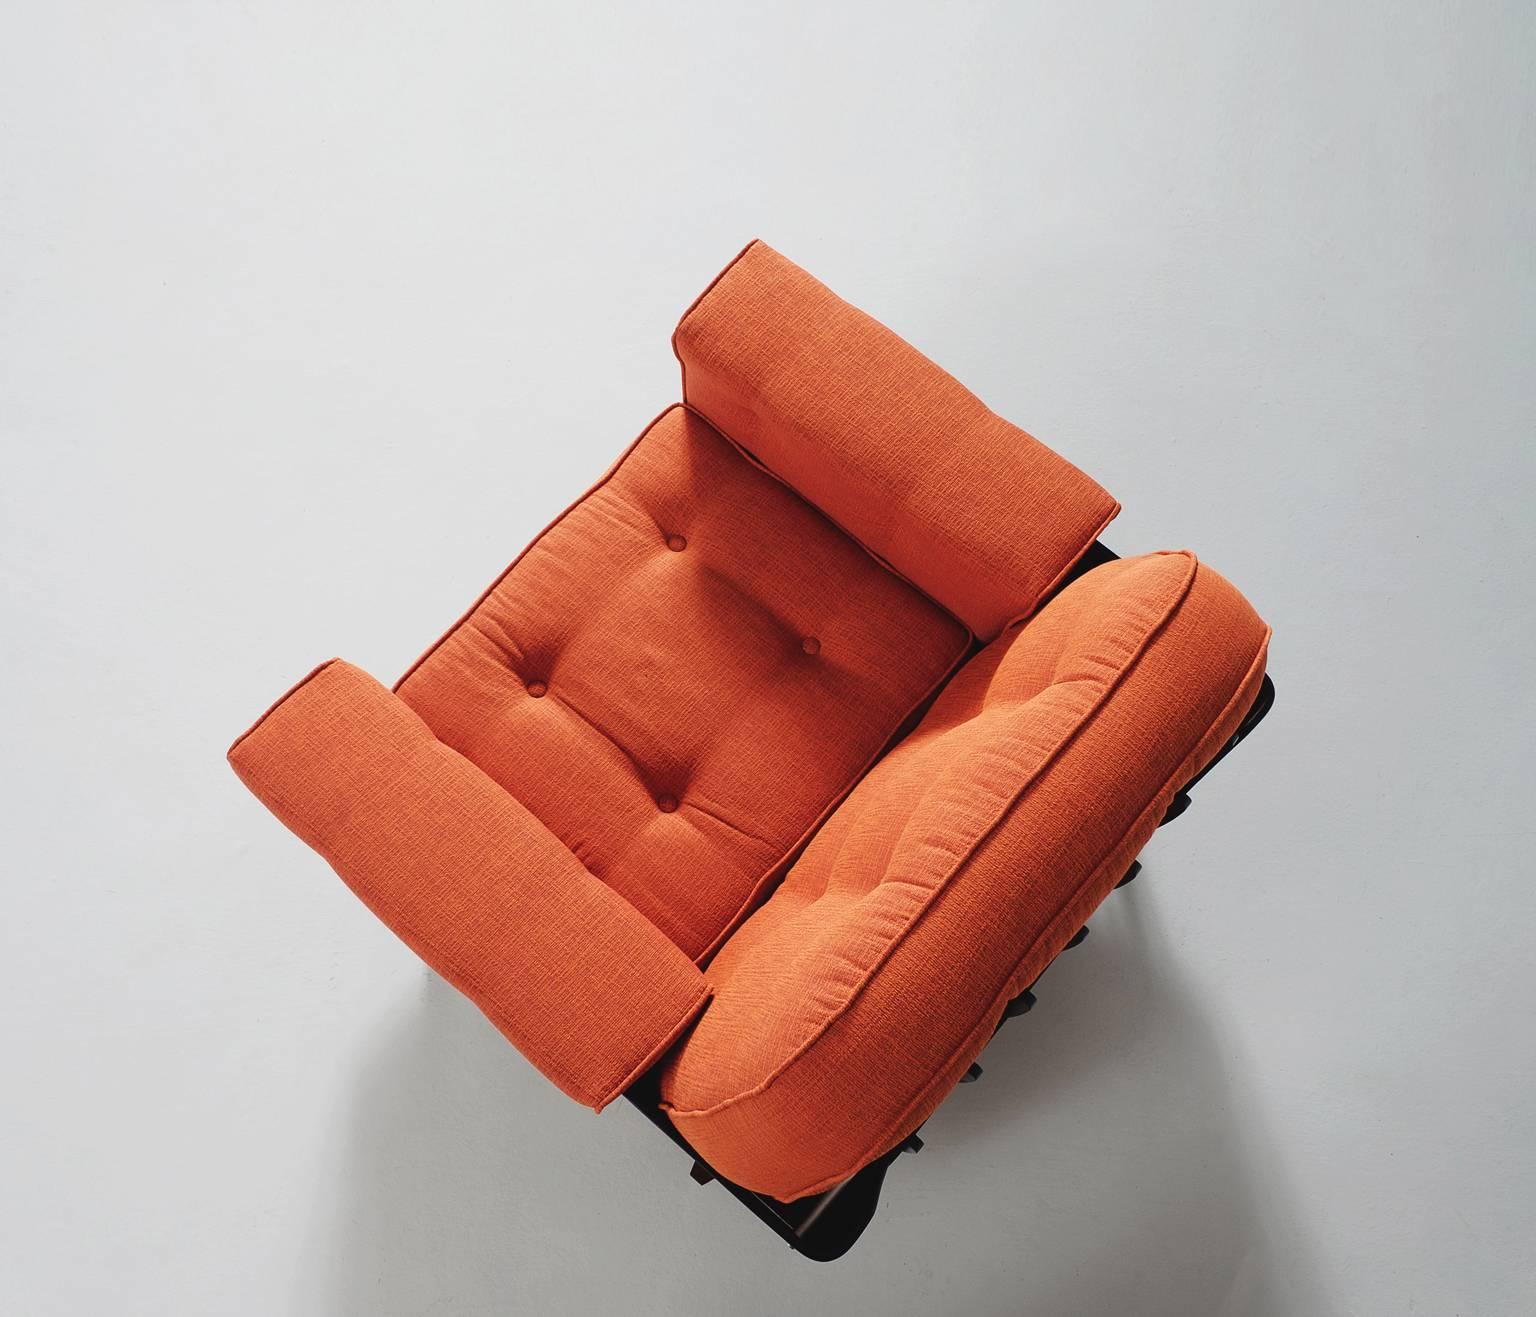 Pair of Rosewood Lounge Chairs, Jorge Zalszupin 1